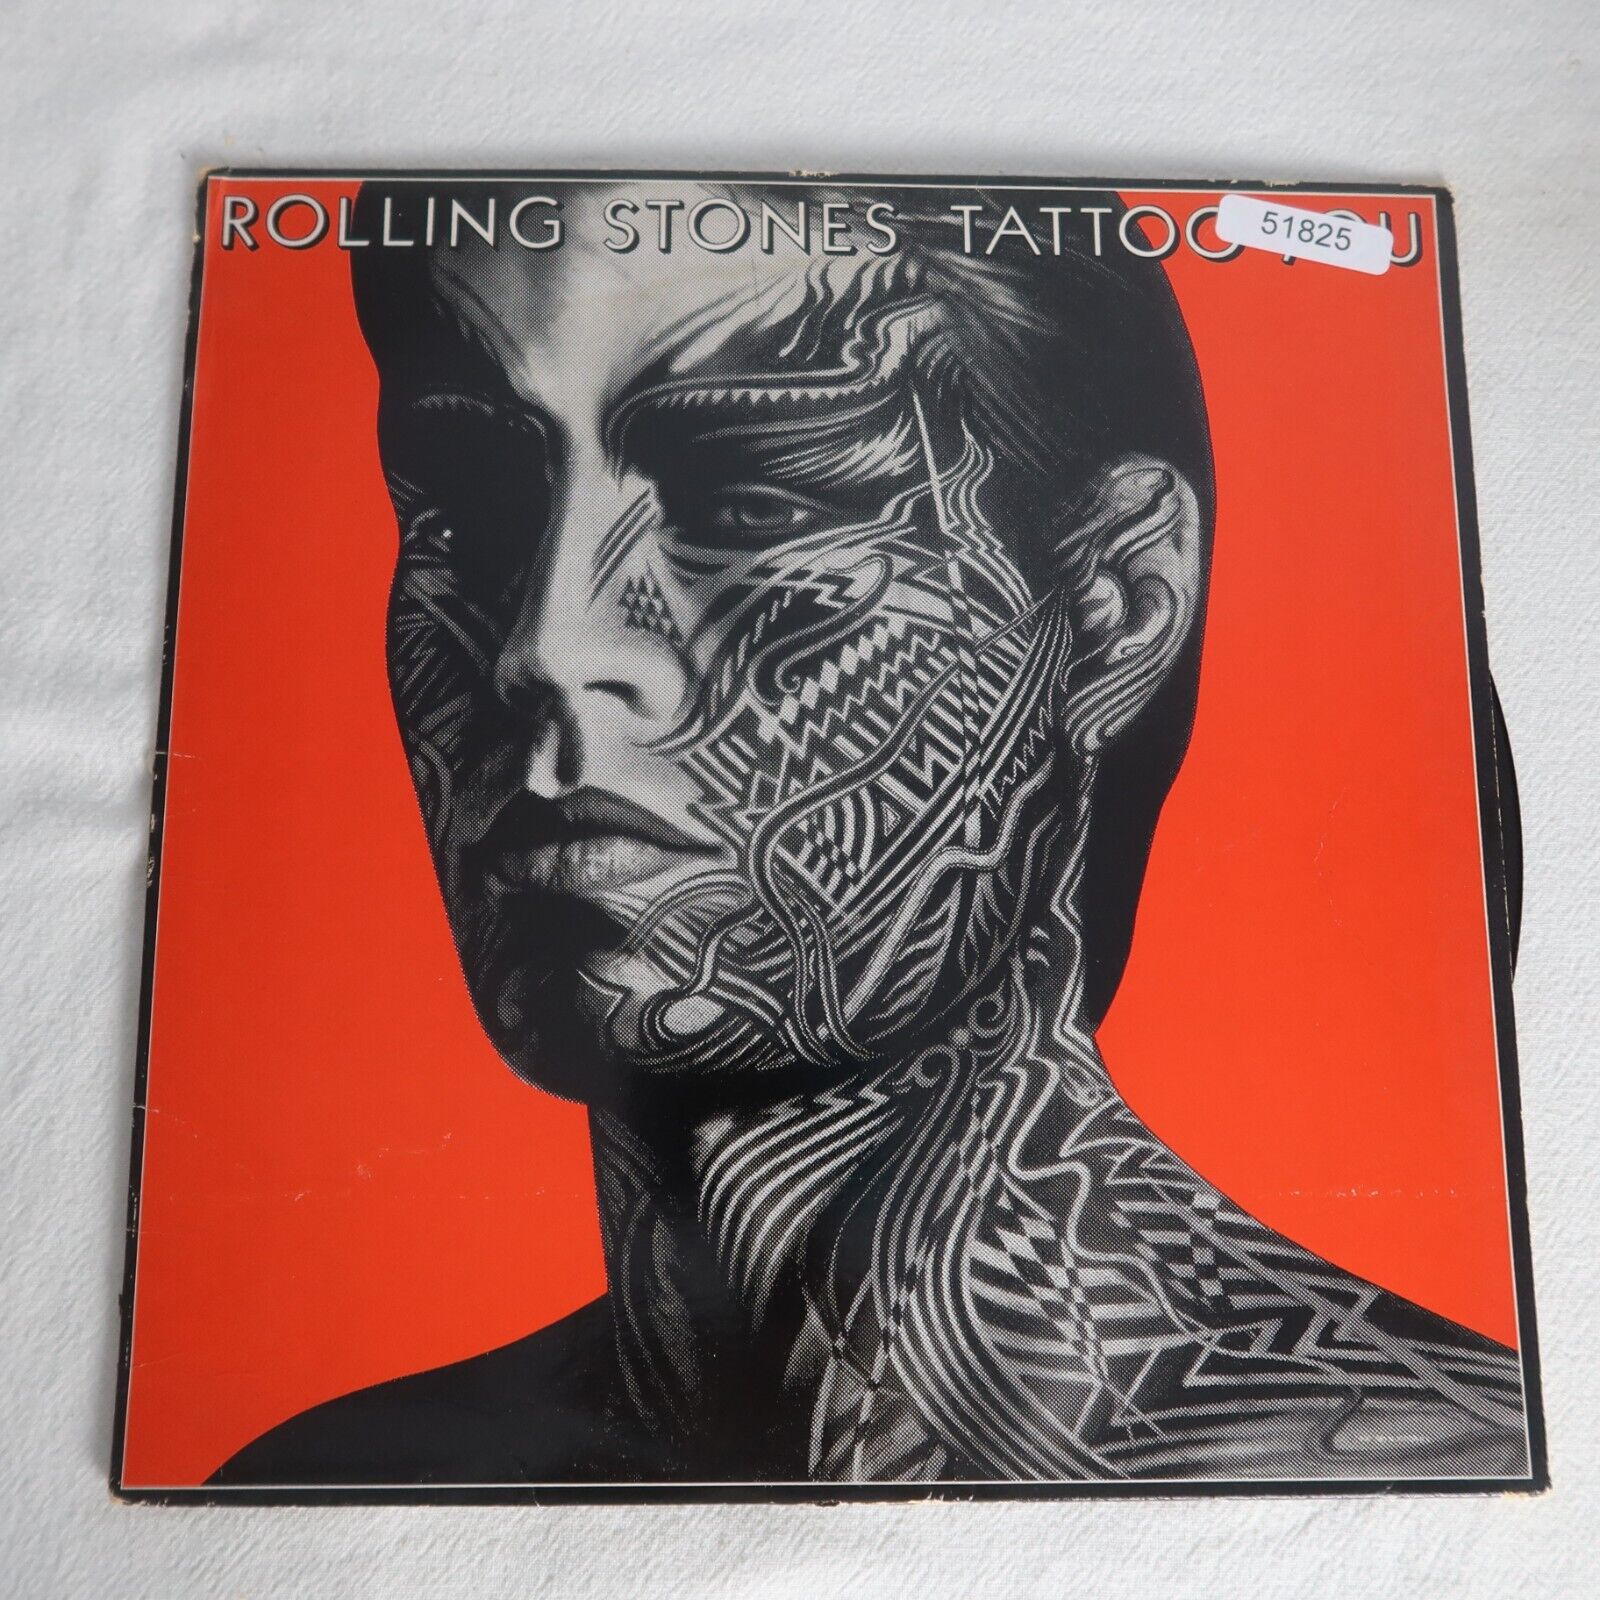 The Rolling Stones Tattoo You ROLLING STONES Coc 16052 LP Vinyl Record Album